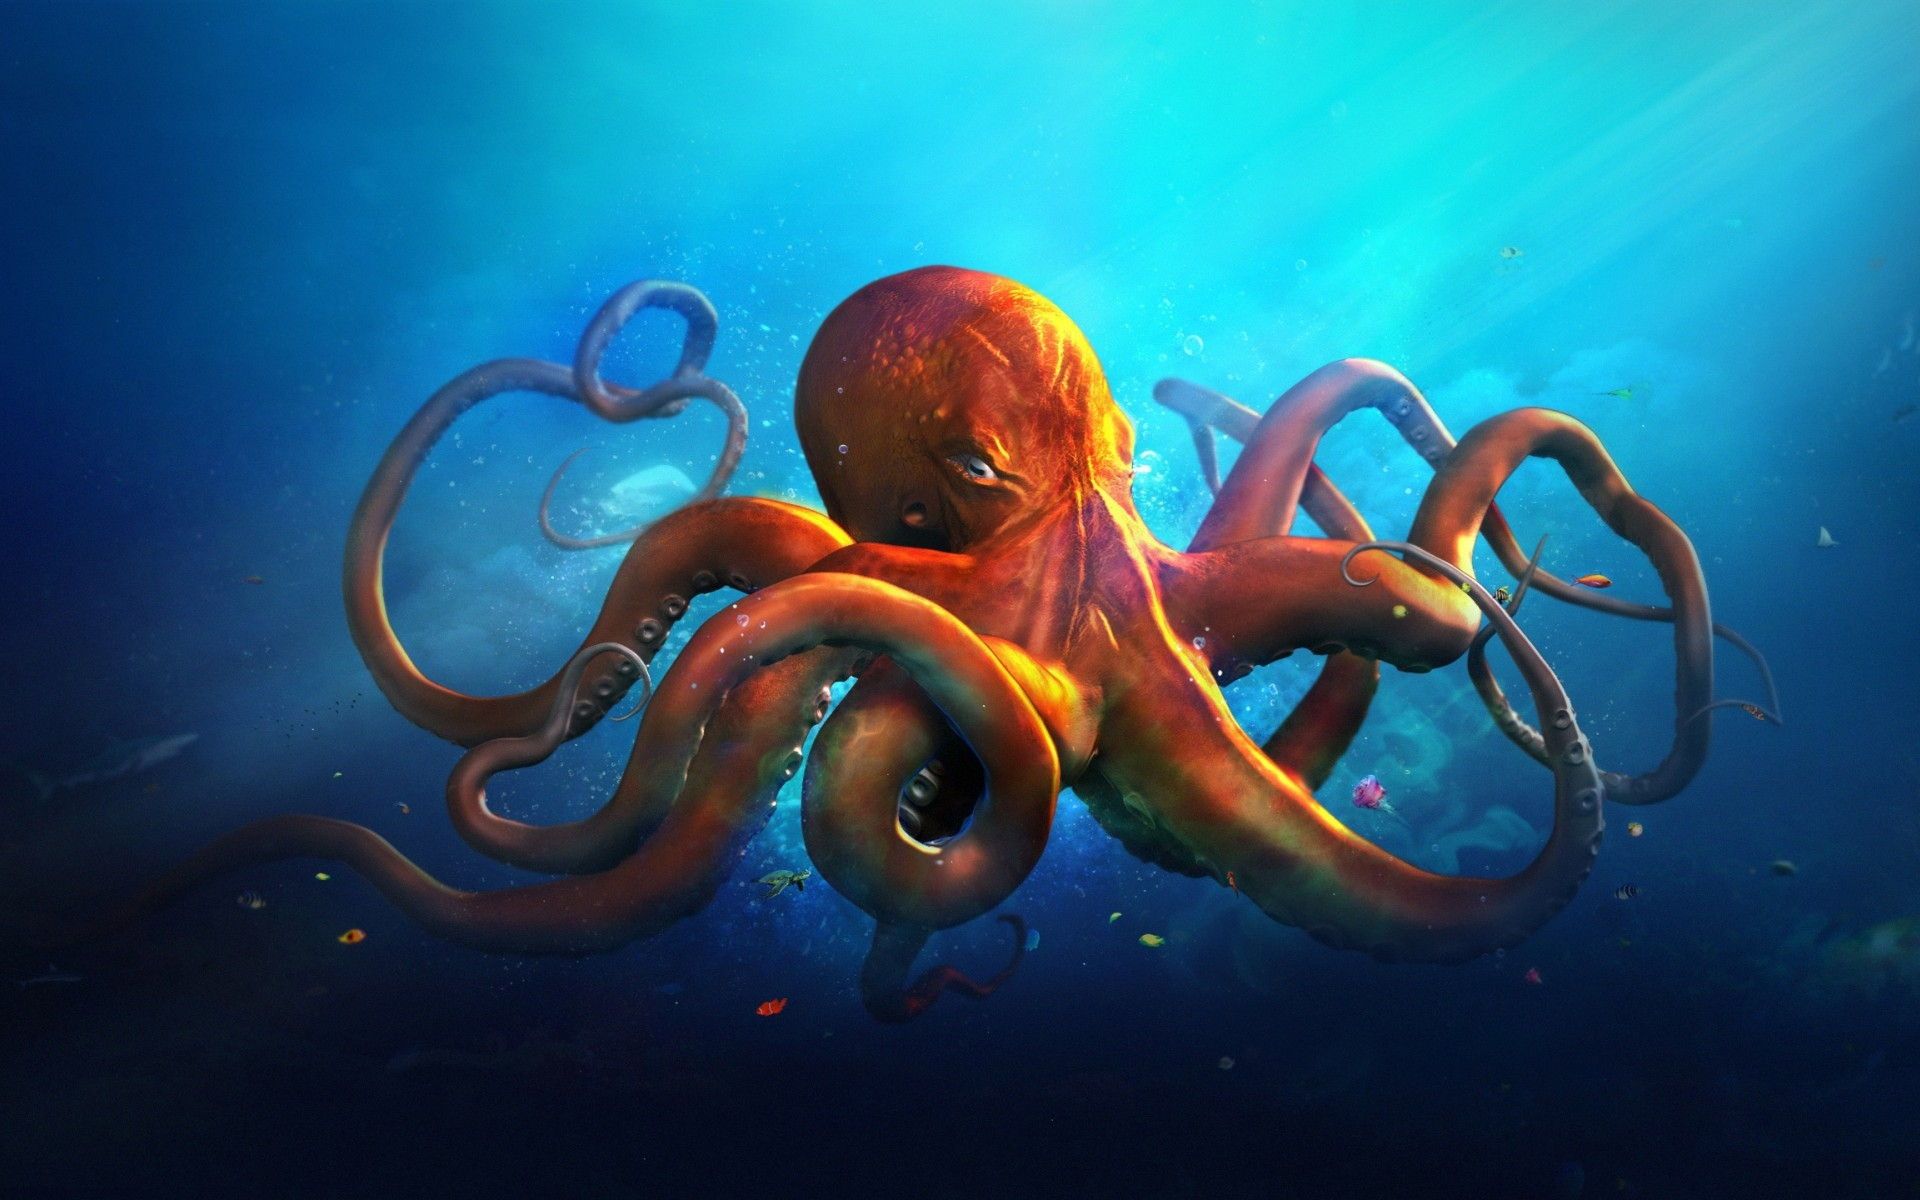 Octopus Desktop Wallpaper | Octopus Photos | Cool Wallpapers